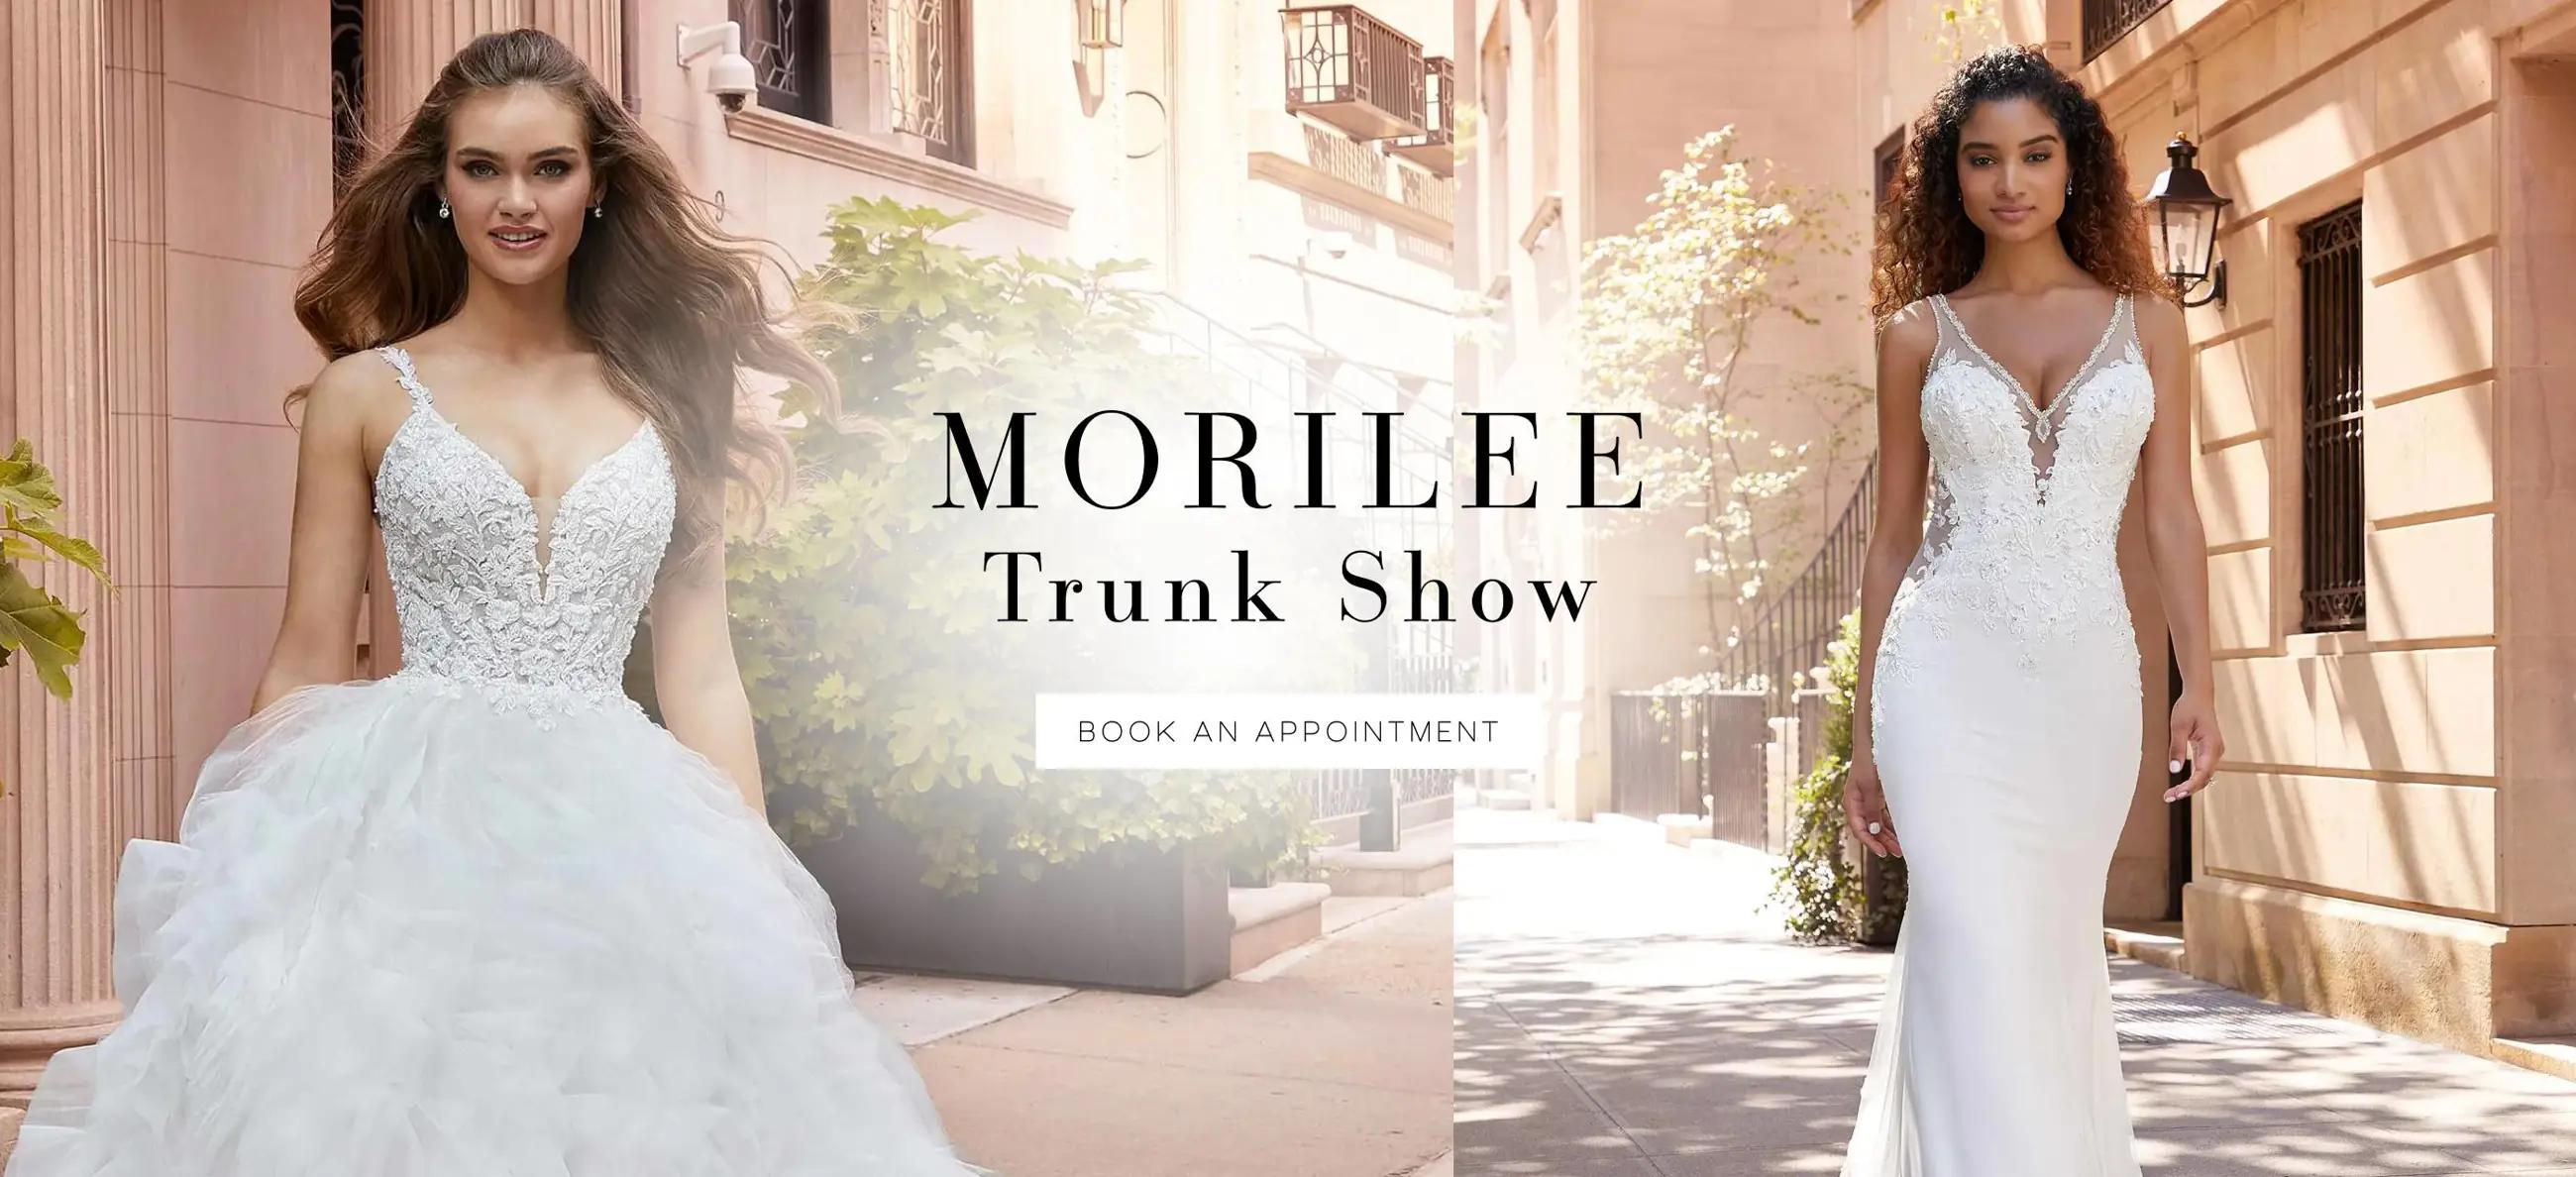 Morilee Trunk Show desktop banner